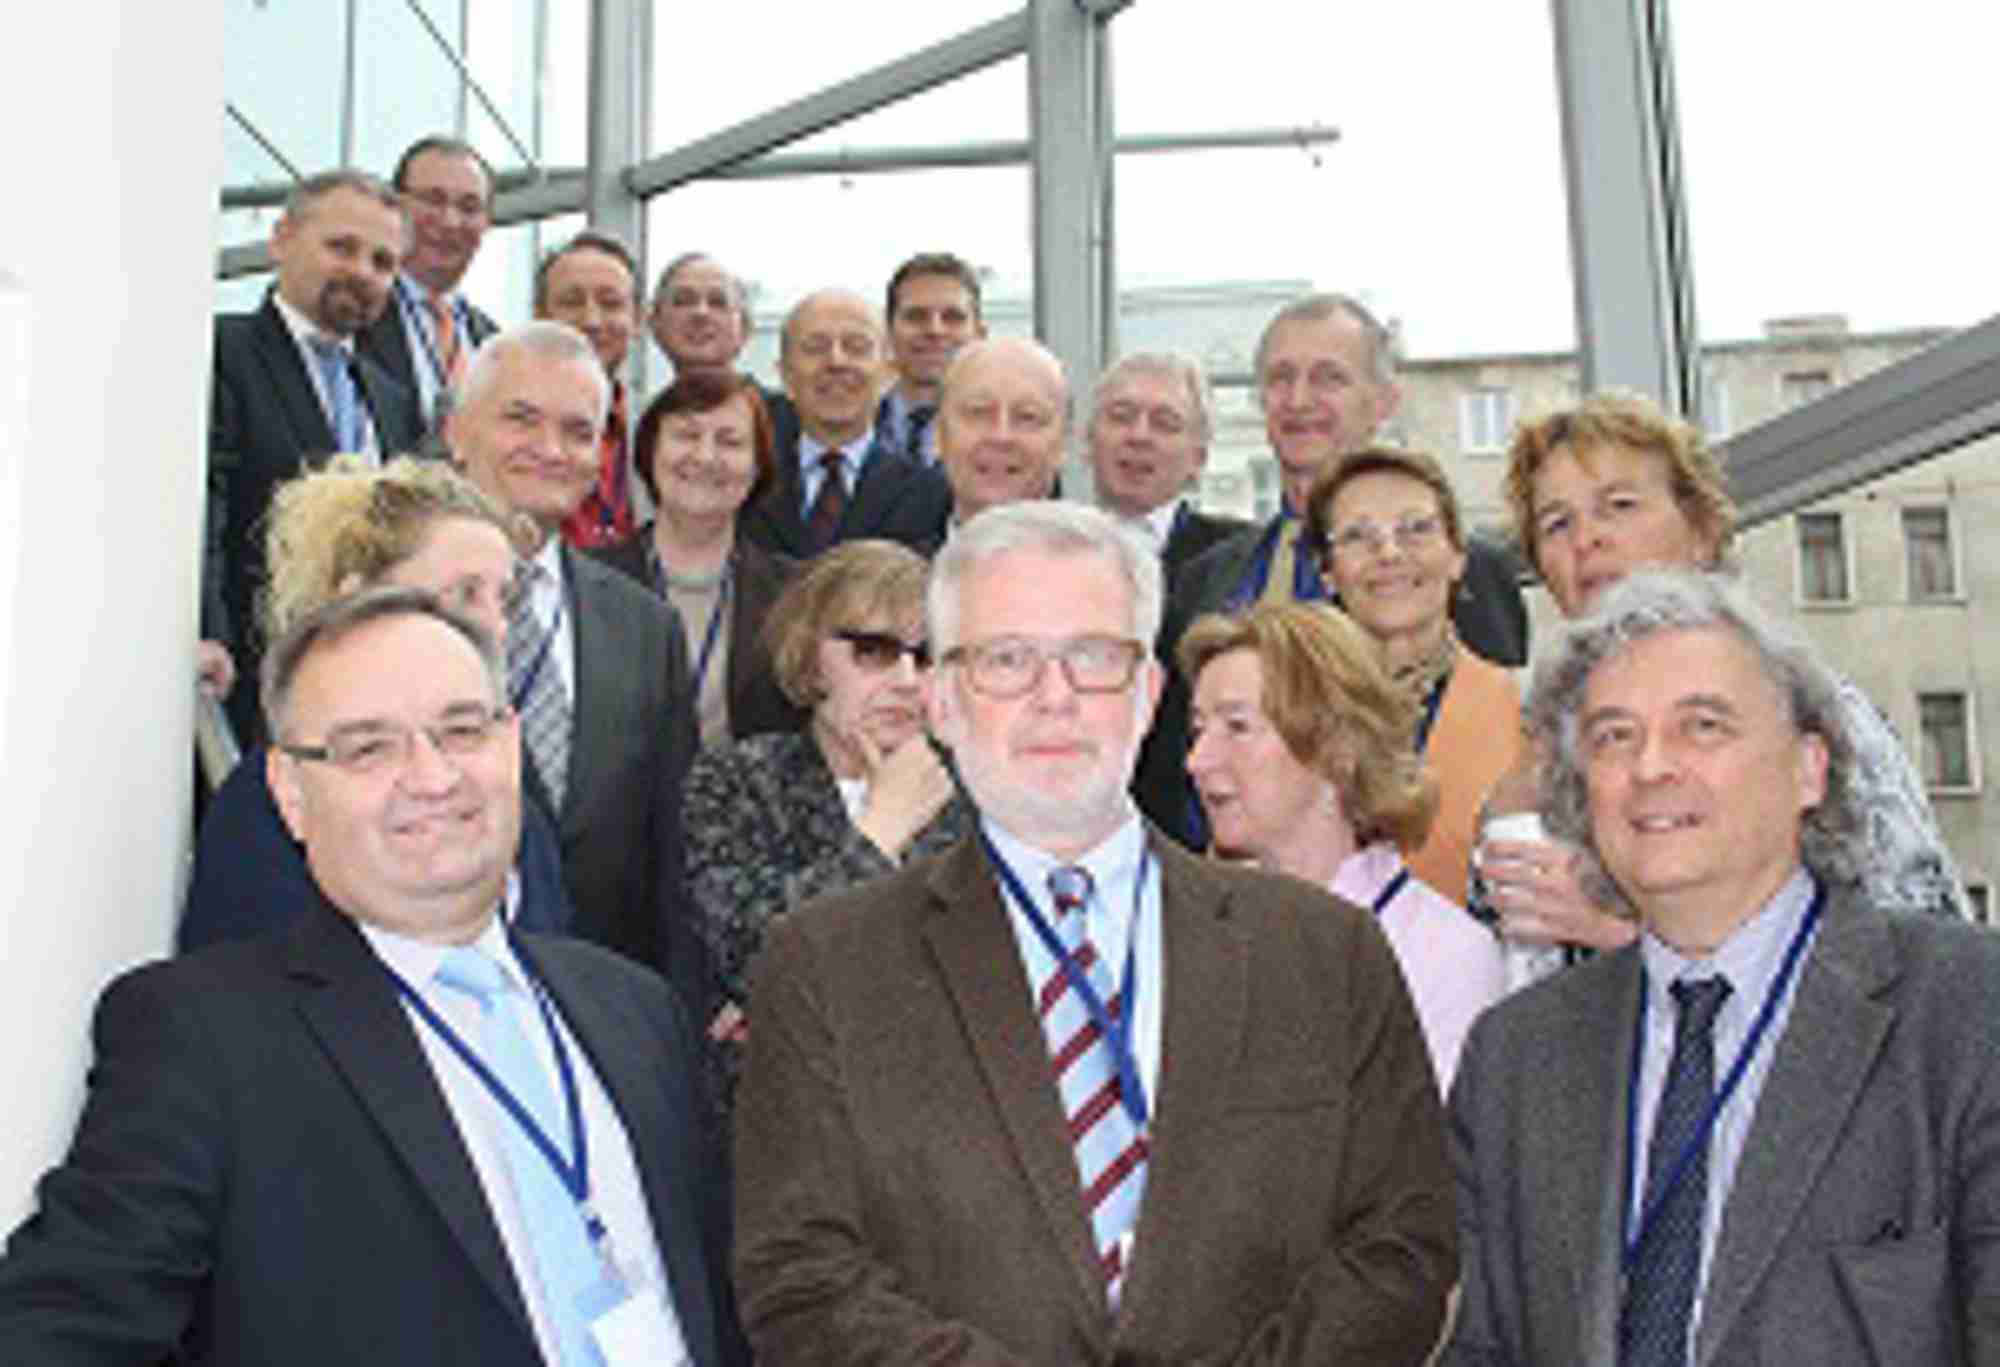 Members of UEMS Endocrinology at their 2015 meeting